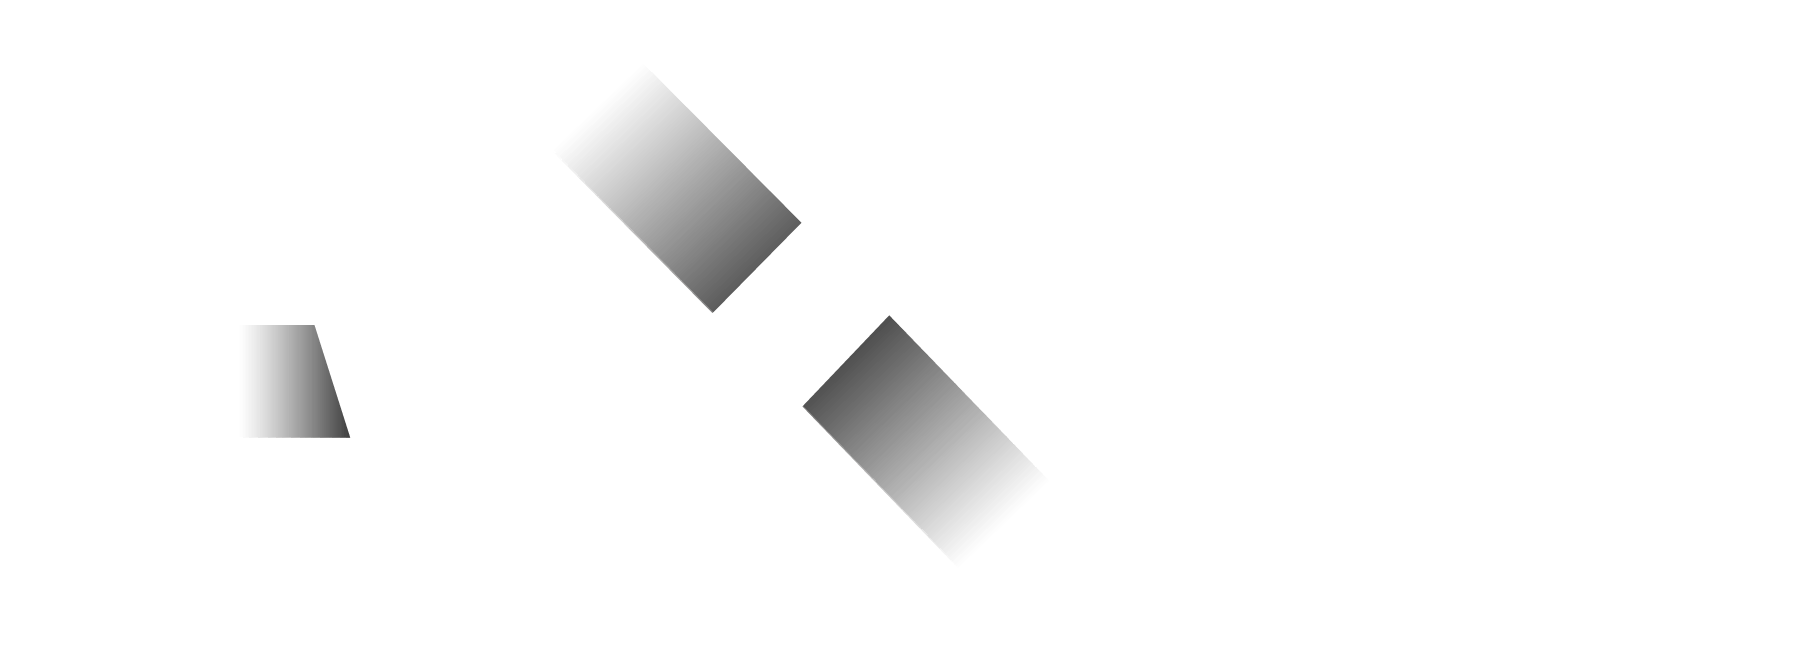 Axis Logo - axis-logo-new - Massive